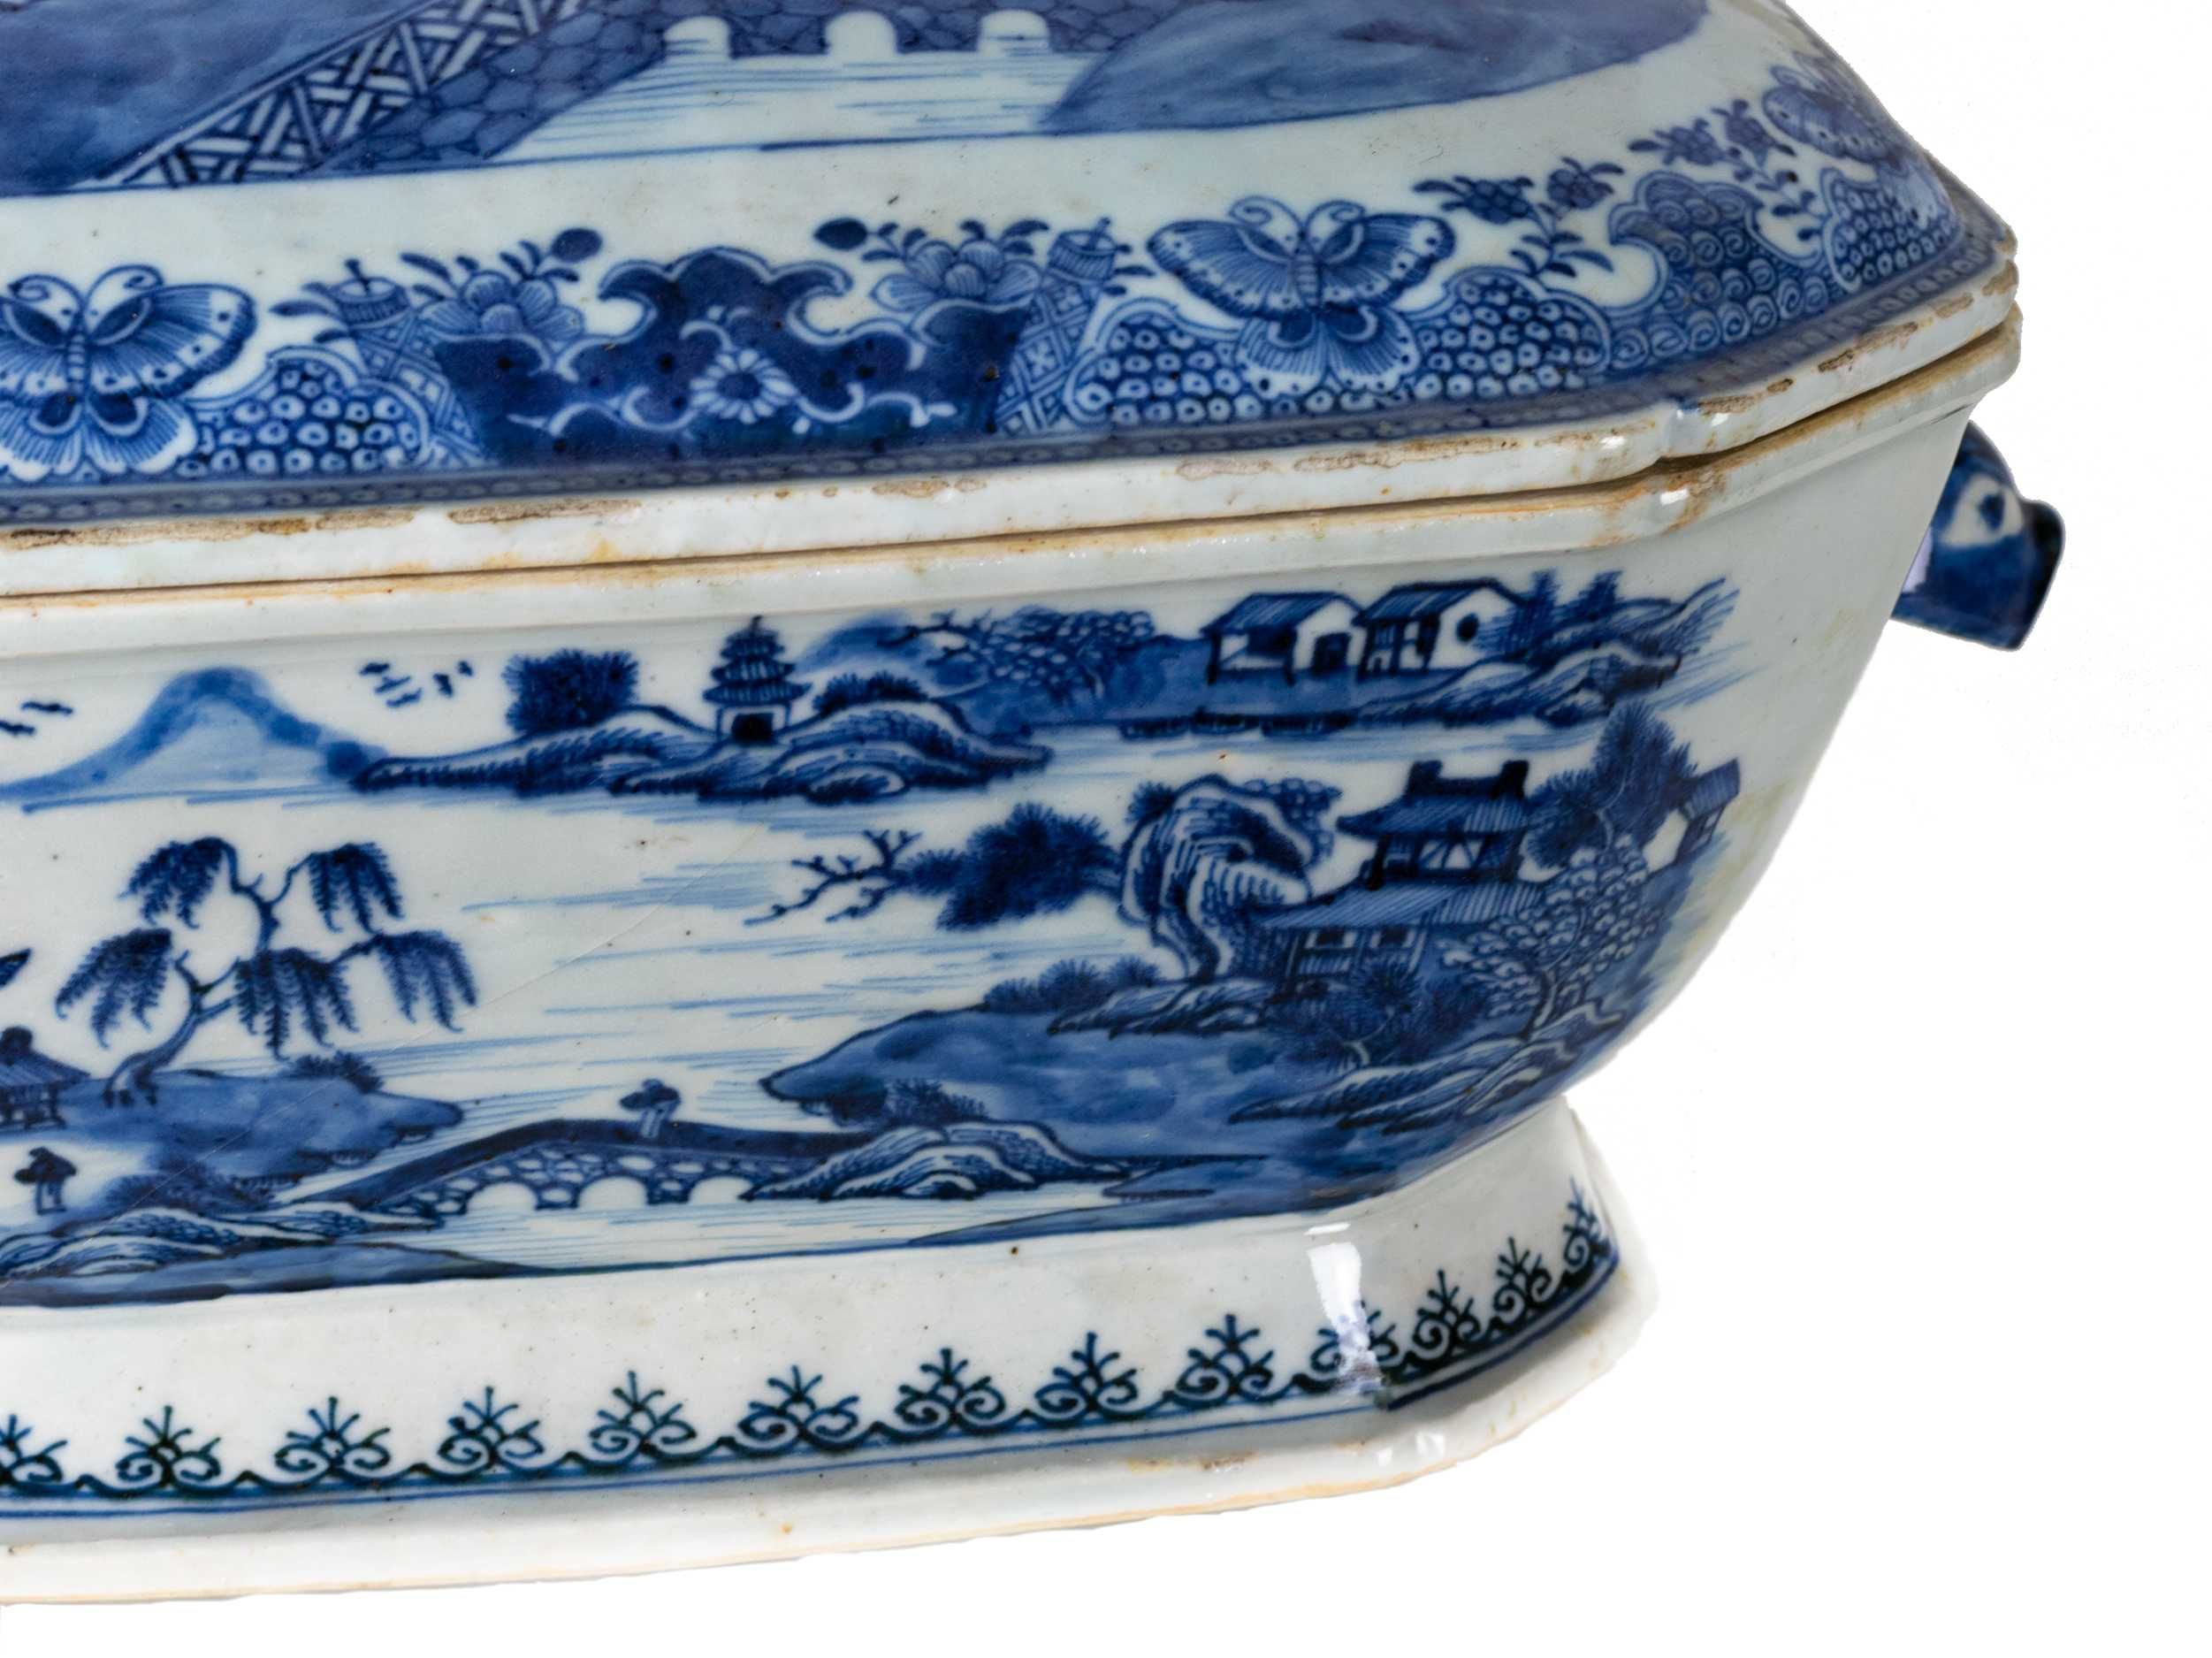 Terrina porcelana chinesa azul Cantão Jiaqing | 1798